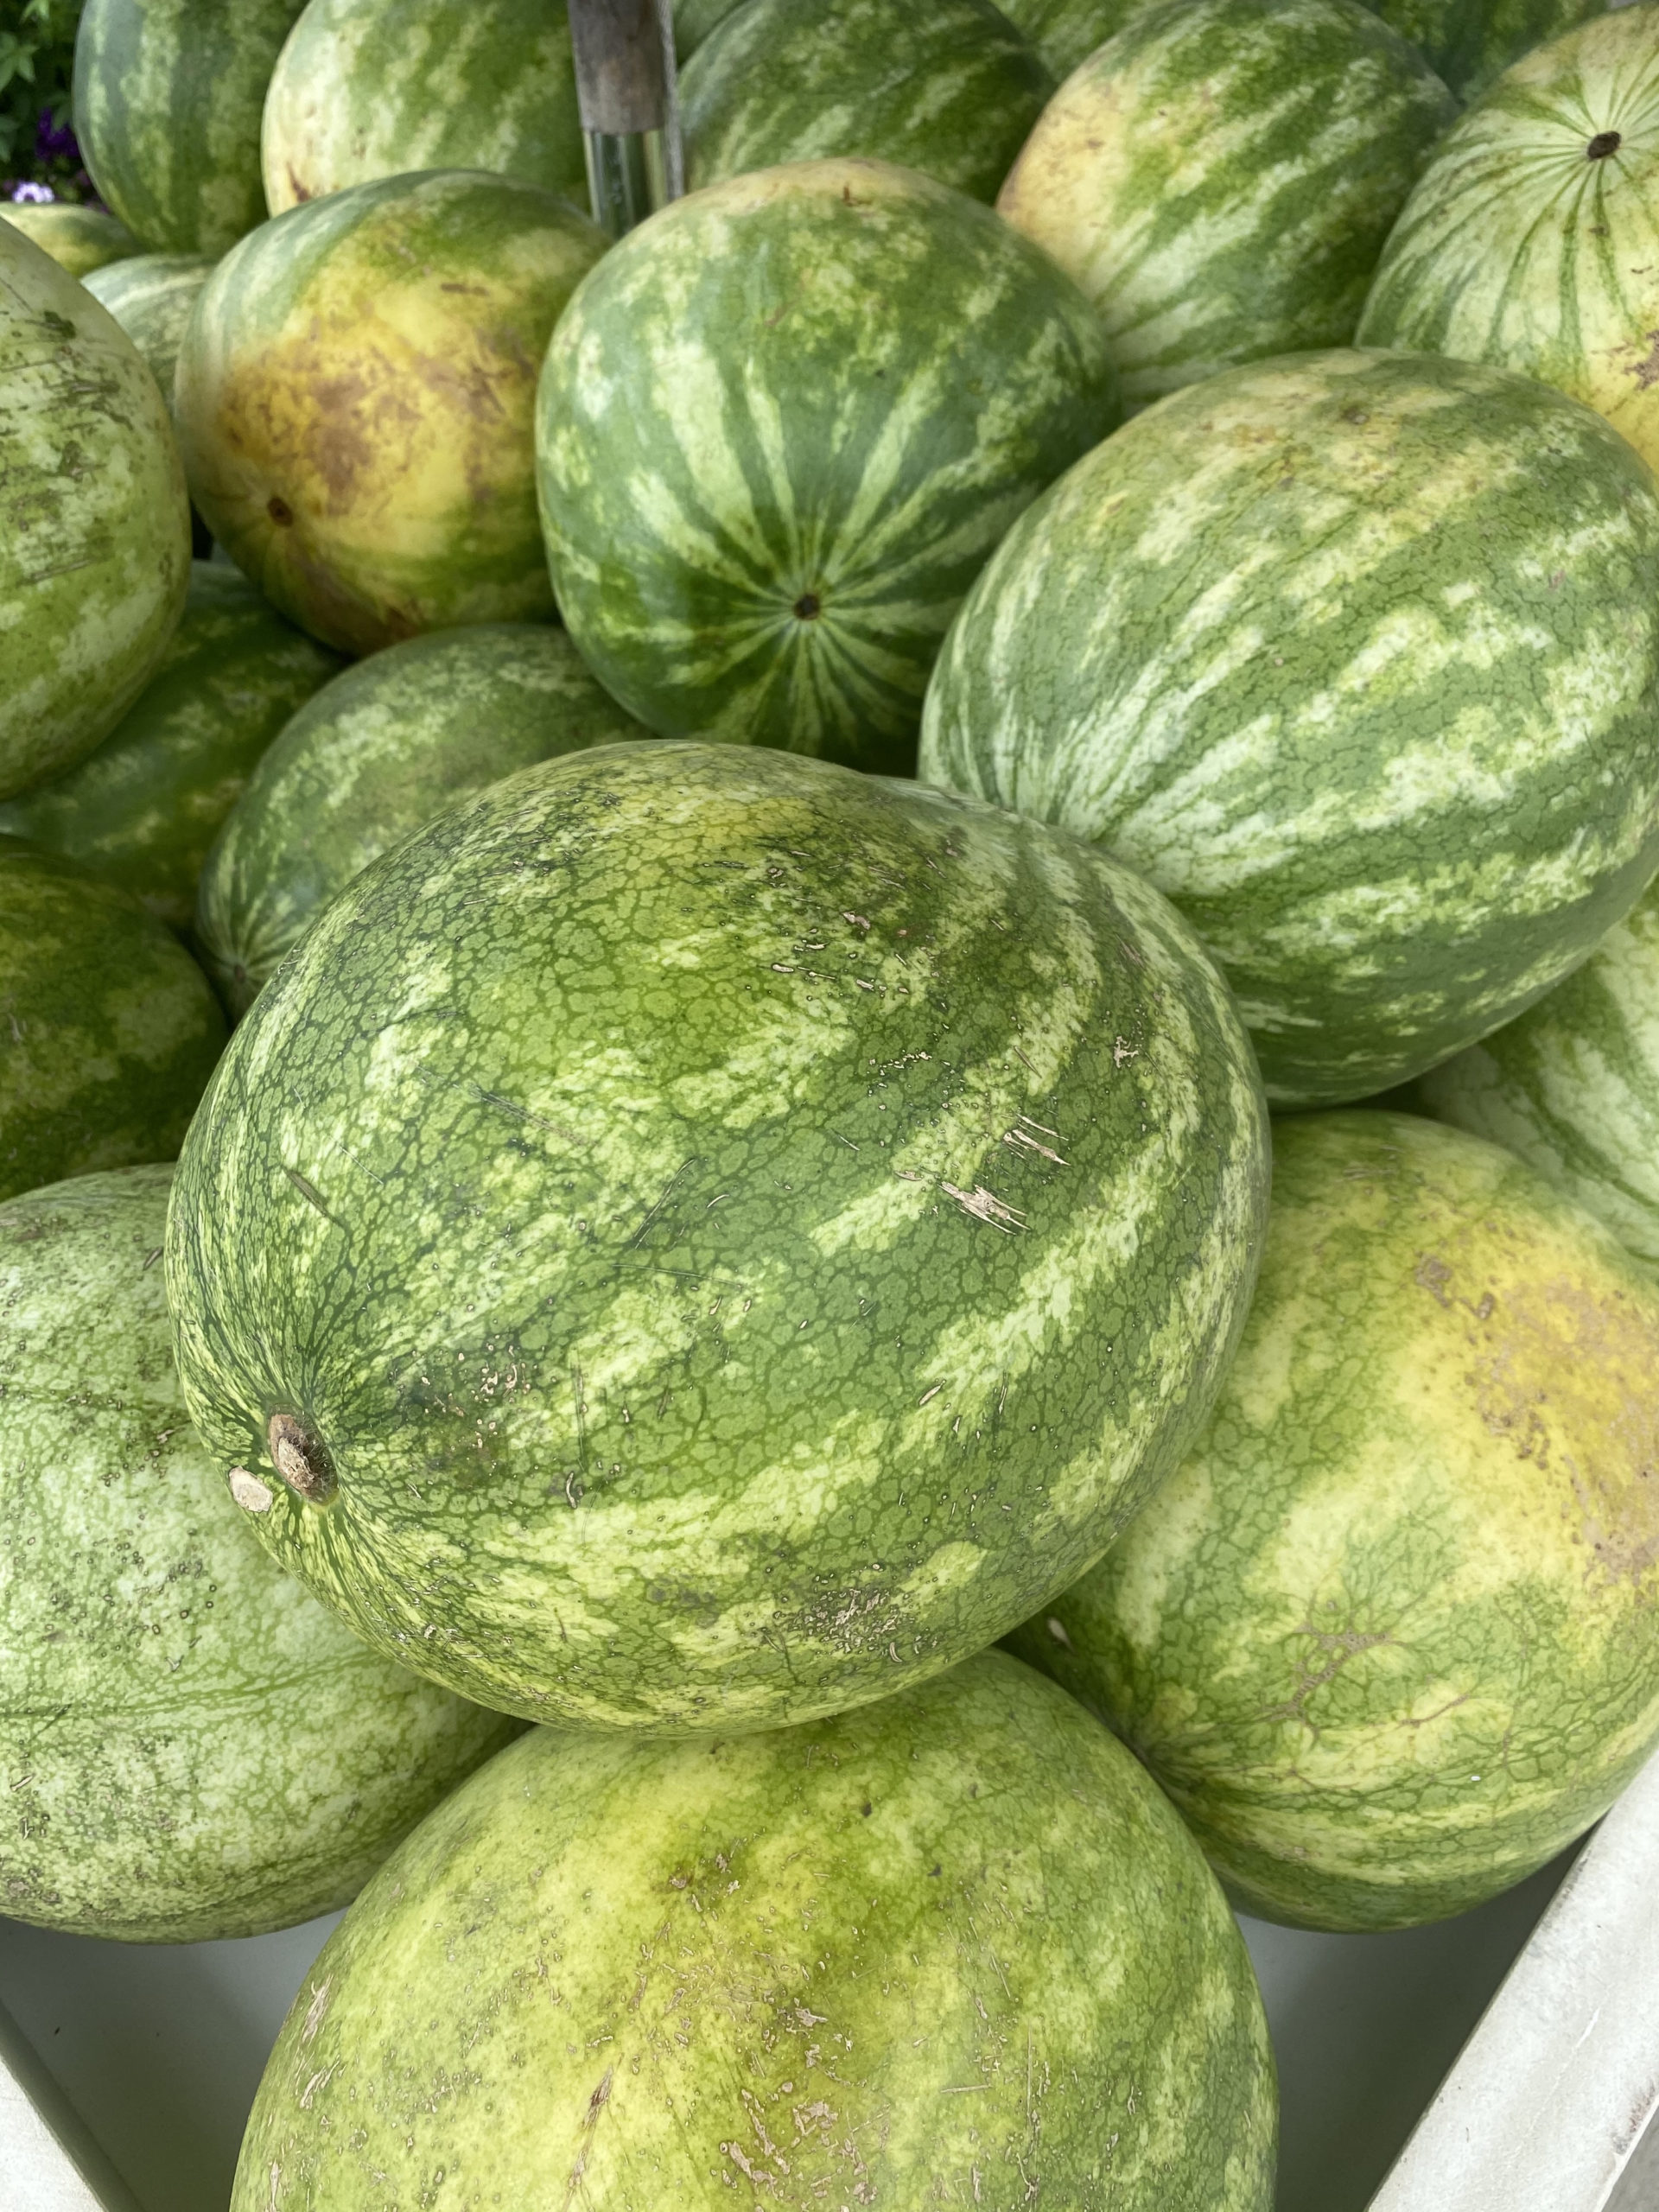 Halsey Farm’s watermelons.     STEVEN STOLMAN